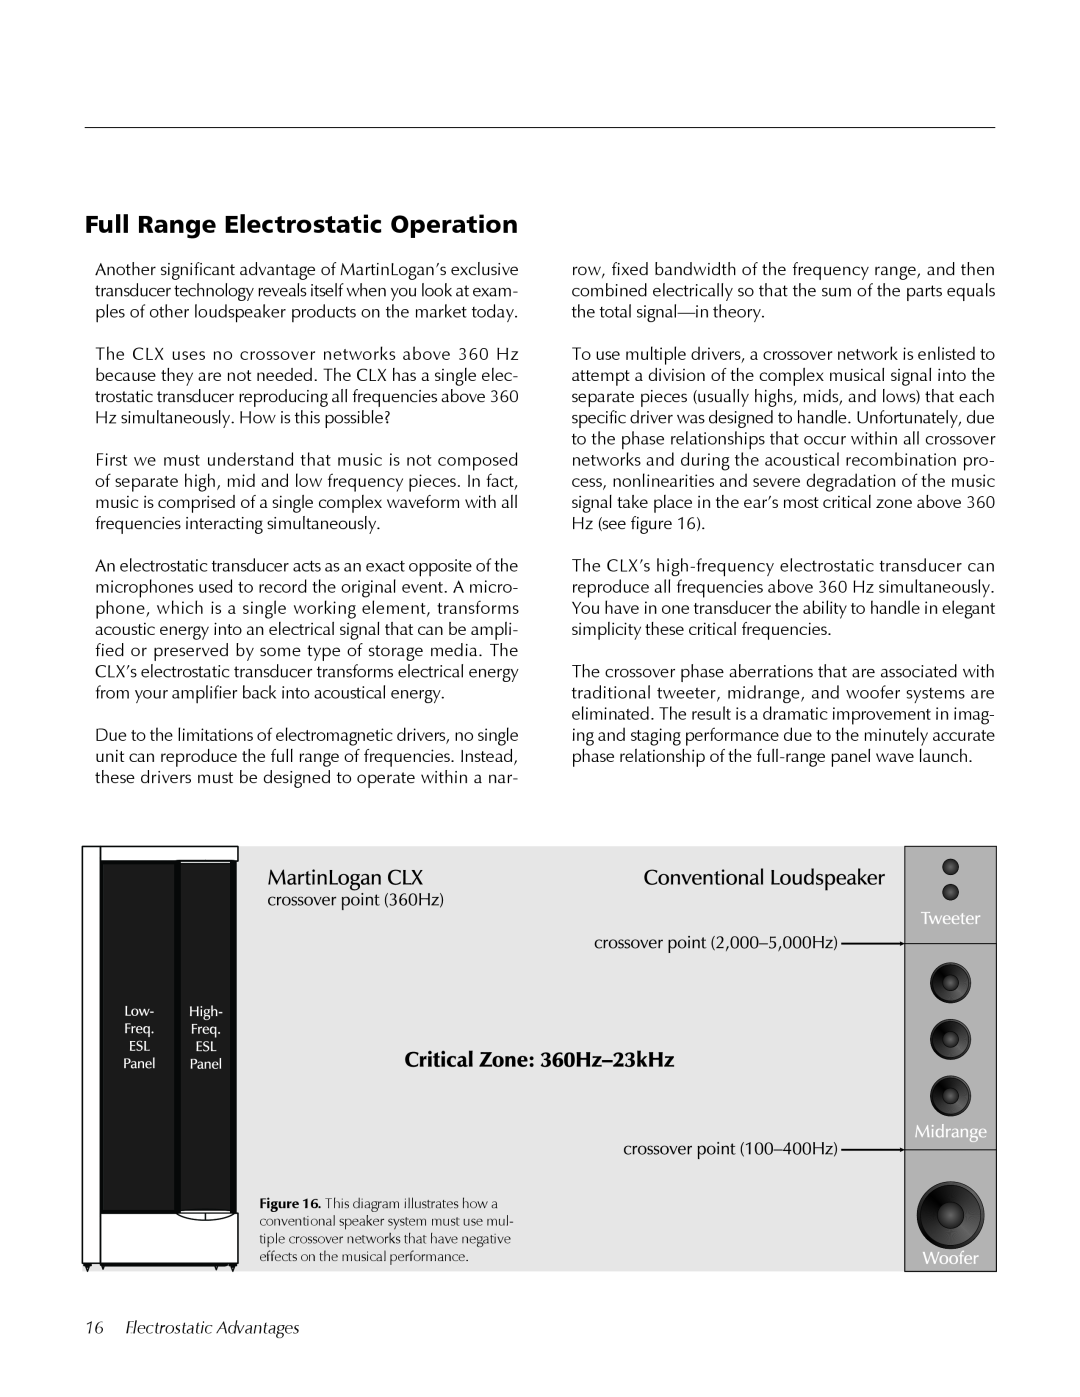 MartinLogan CLX user manual Full Range Electrostatic Operation, Electrostatic Advantages 